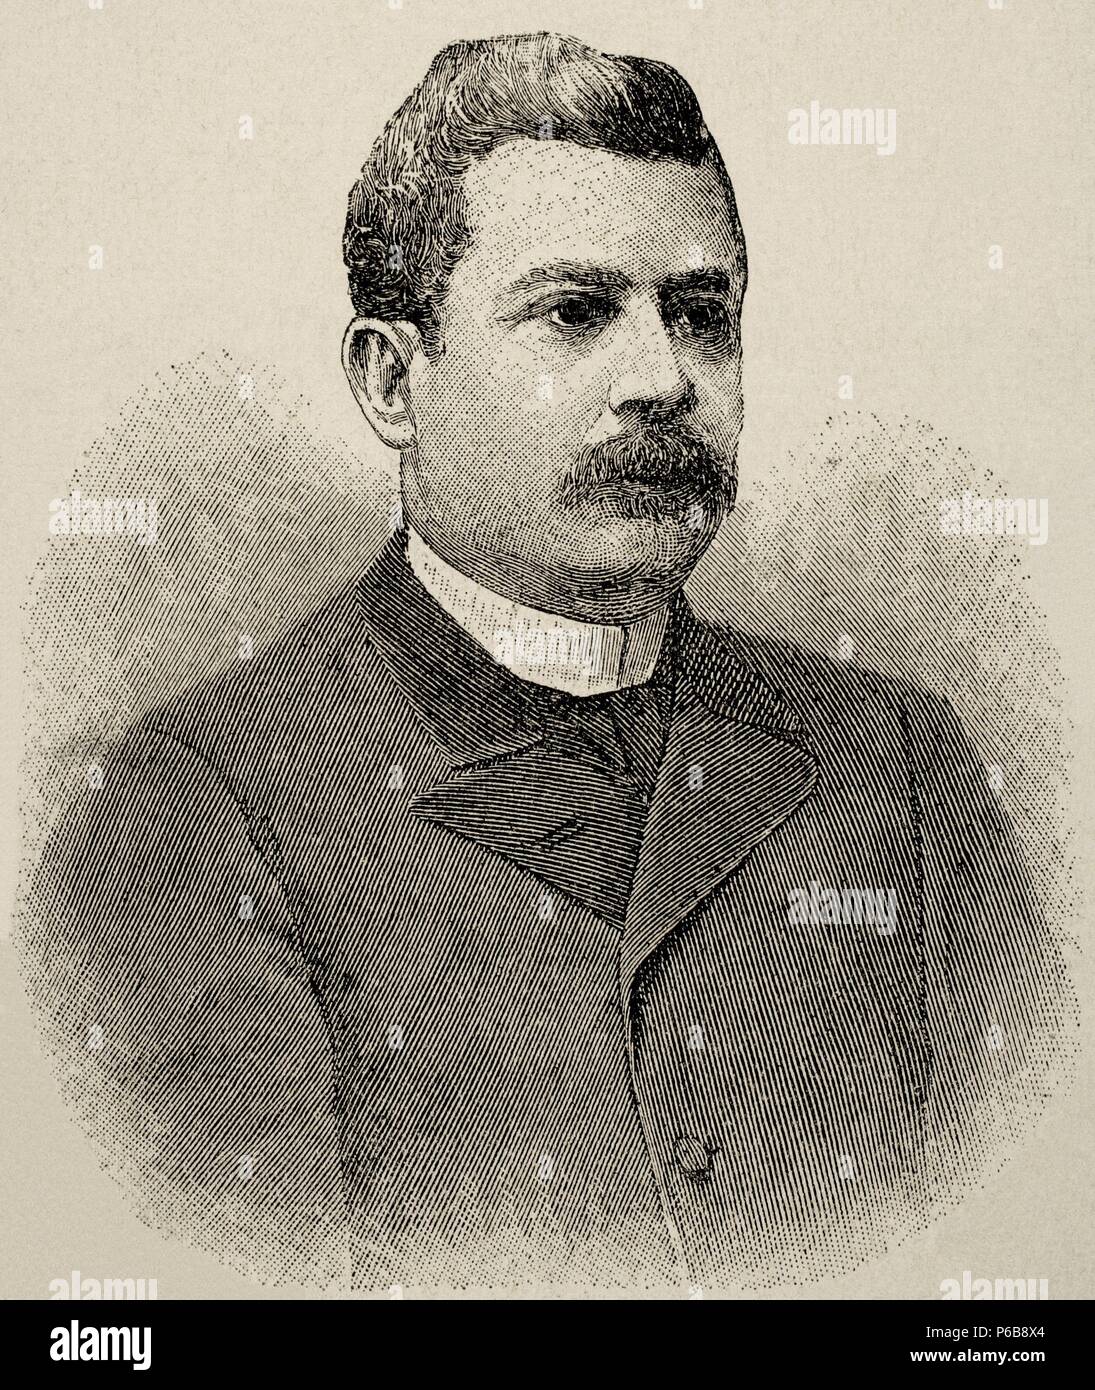 Juan Isidro Jimenes Pereyra (1846Ð1919), Dominican politician. President of the Dominican Republic between 1899-1902 and 1914-1916. Portrait. Engraving. "La Ilustracion Artistica", 1899. Stock Photo